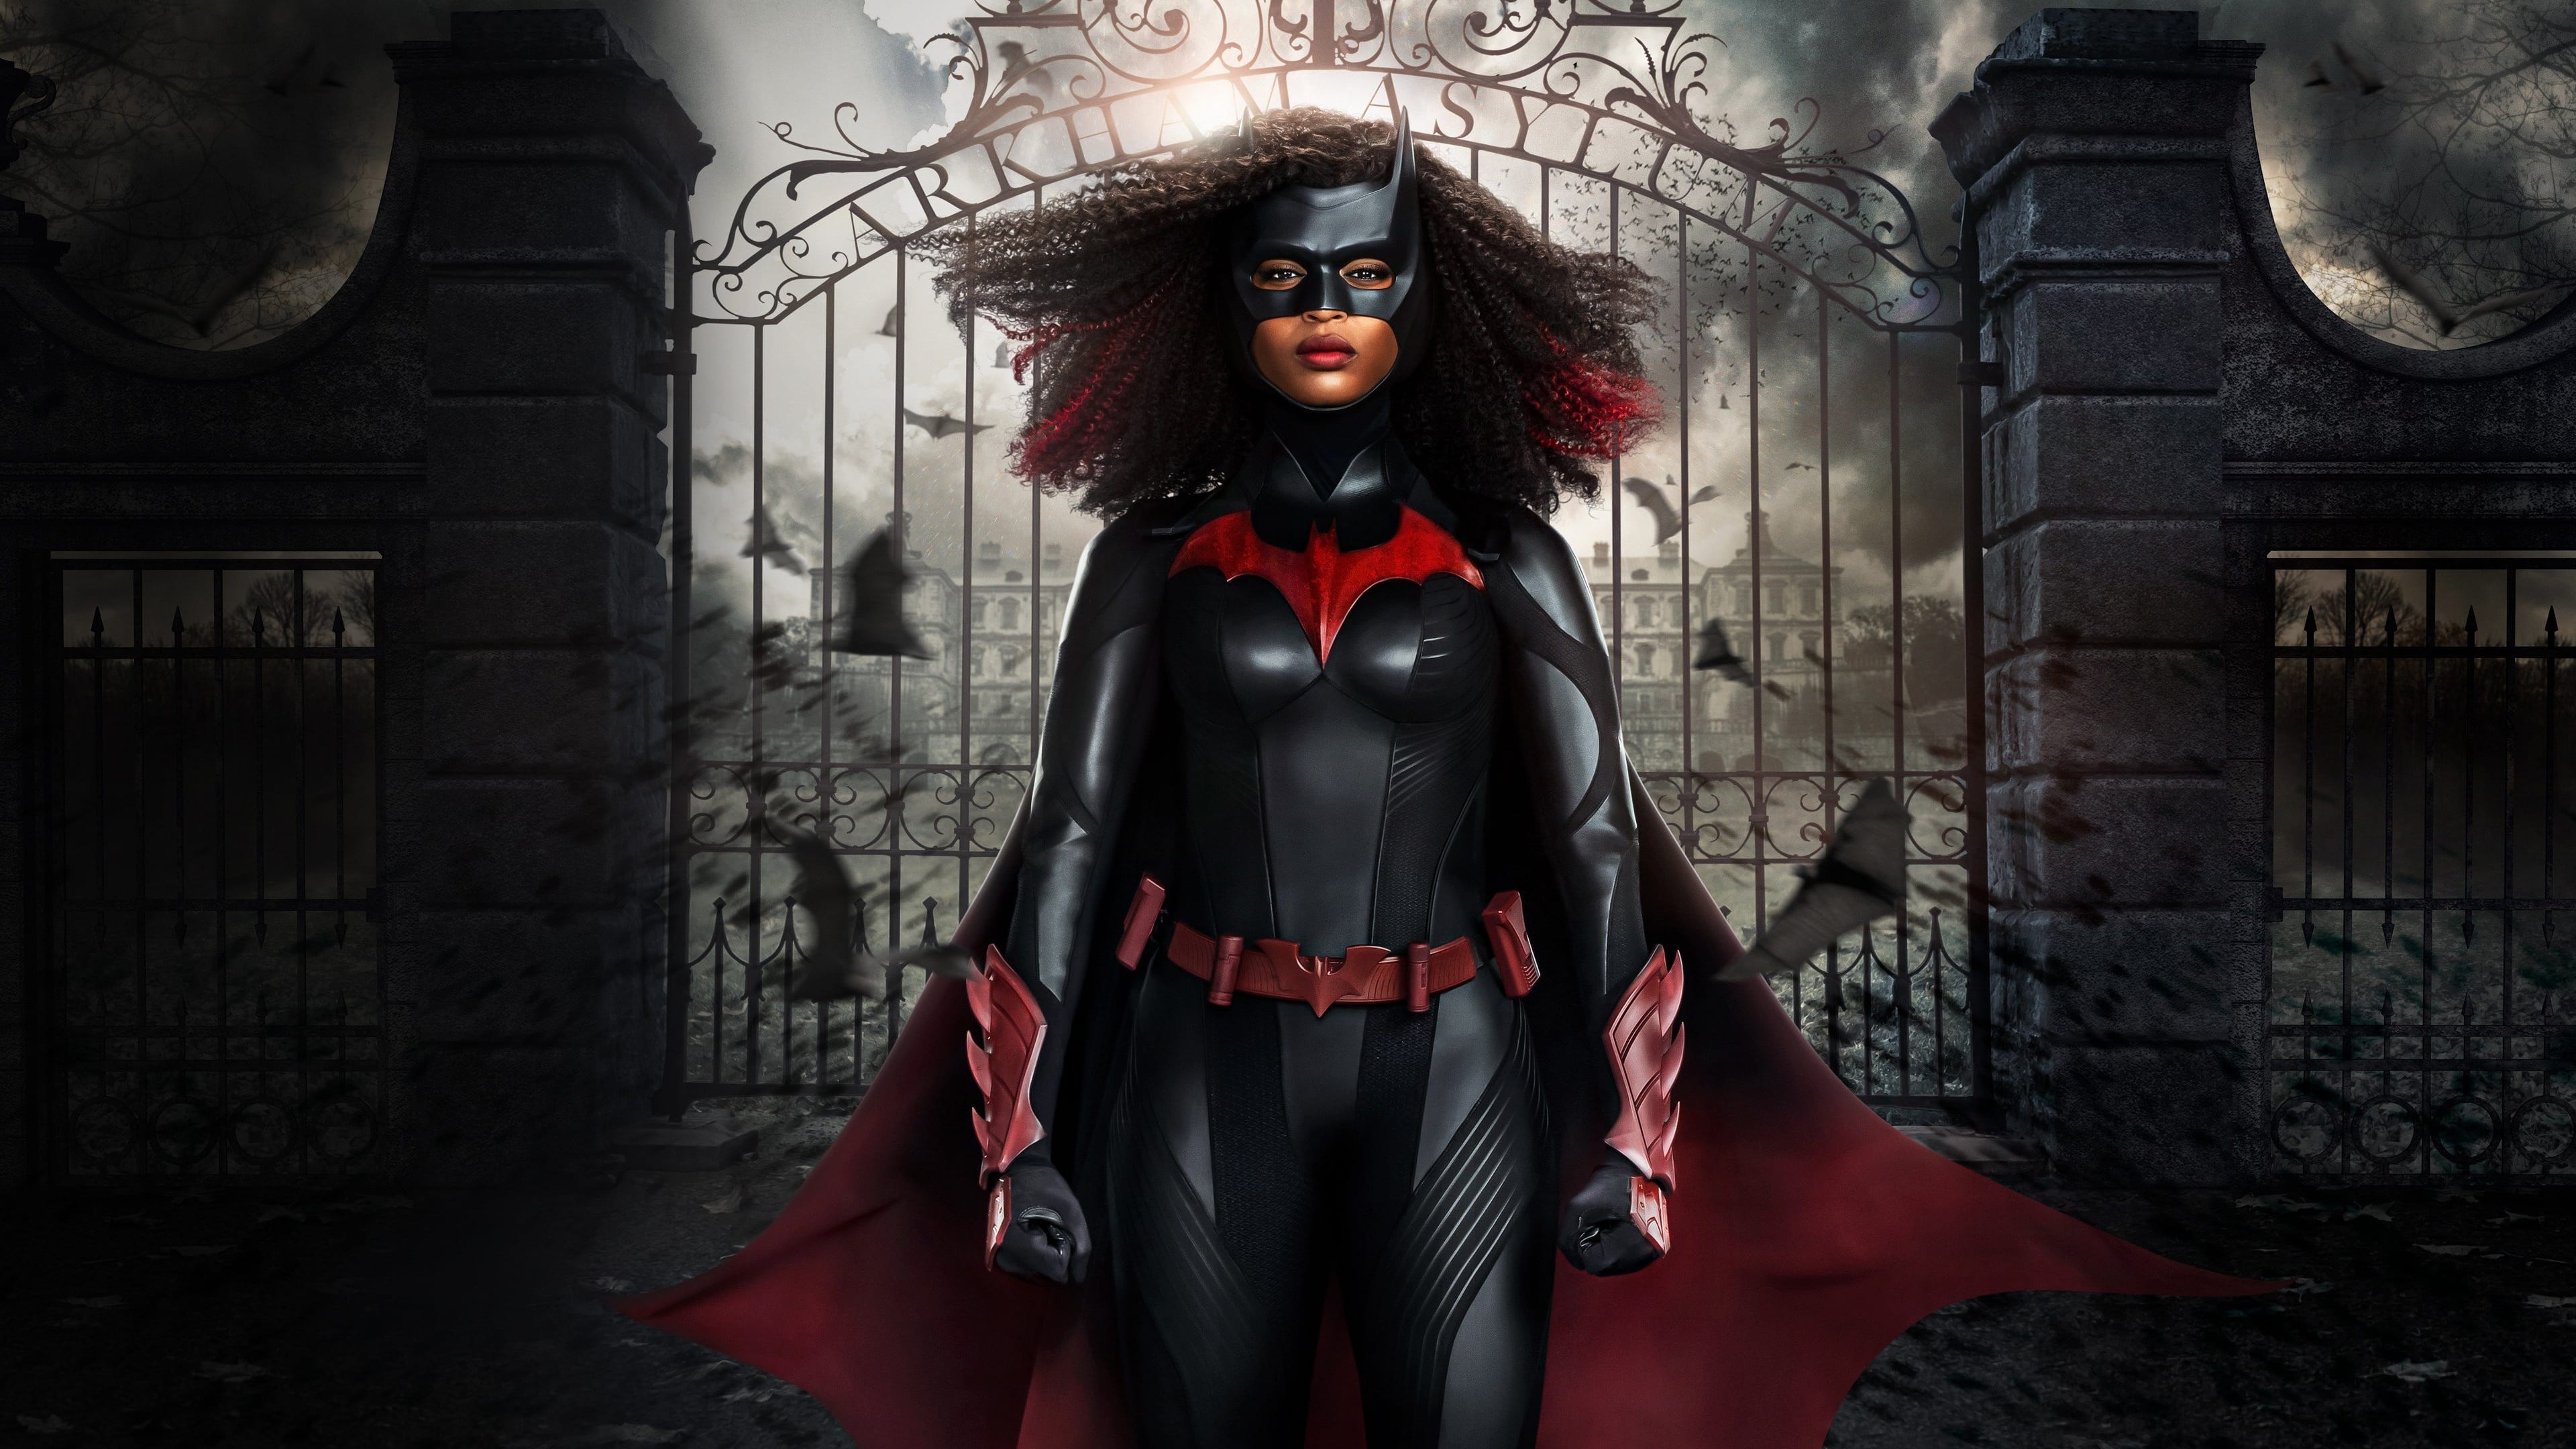 Baixar papel de parede para celular de Programa De Tv, Batwoman gratuito.